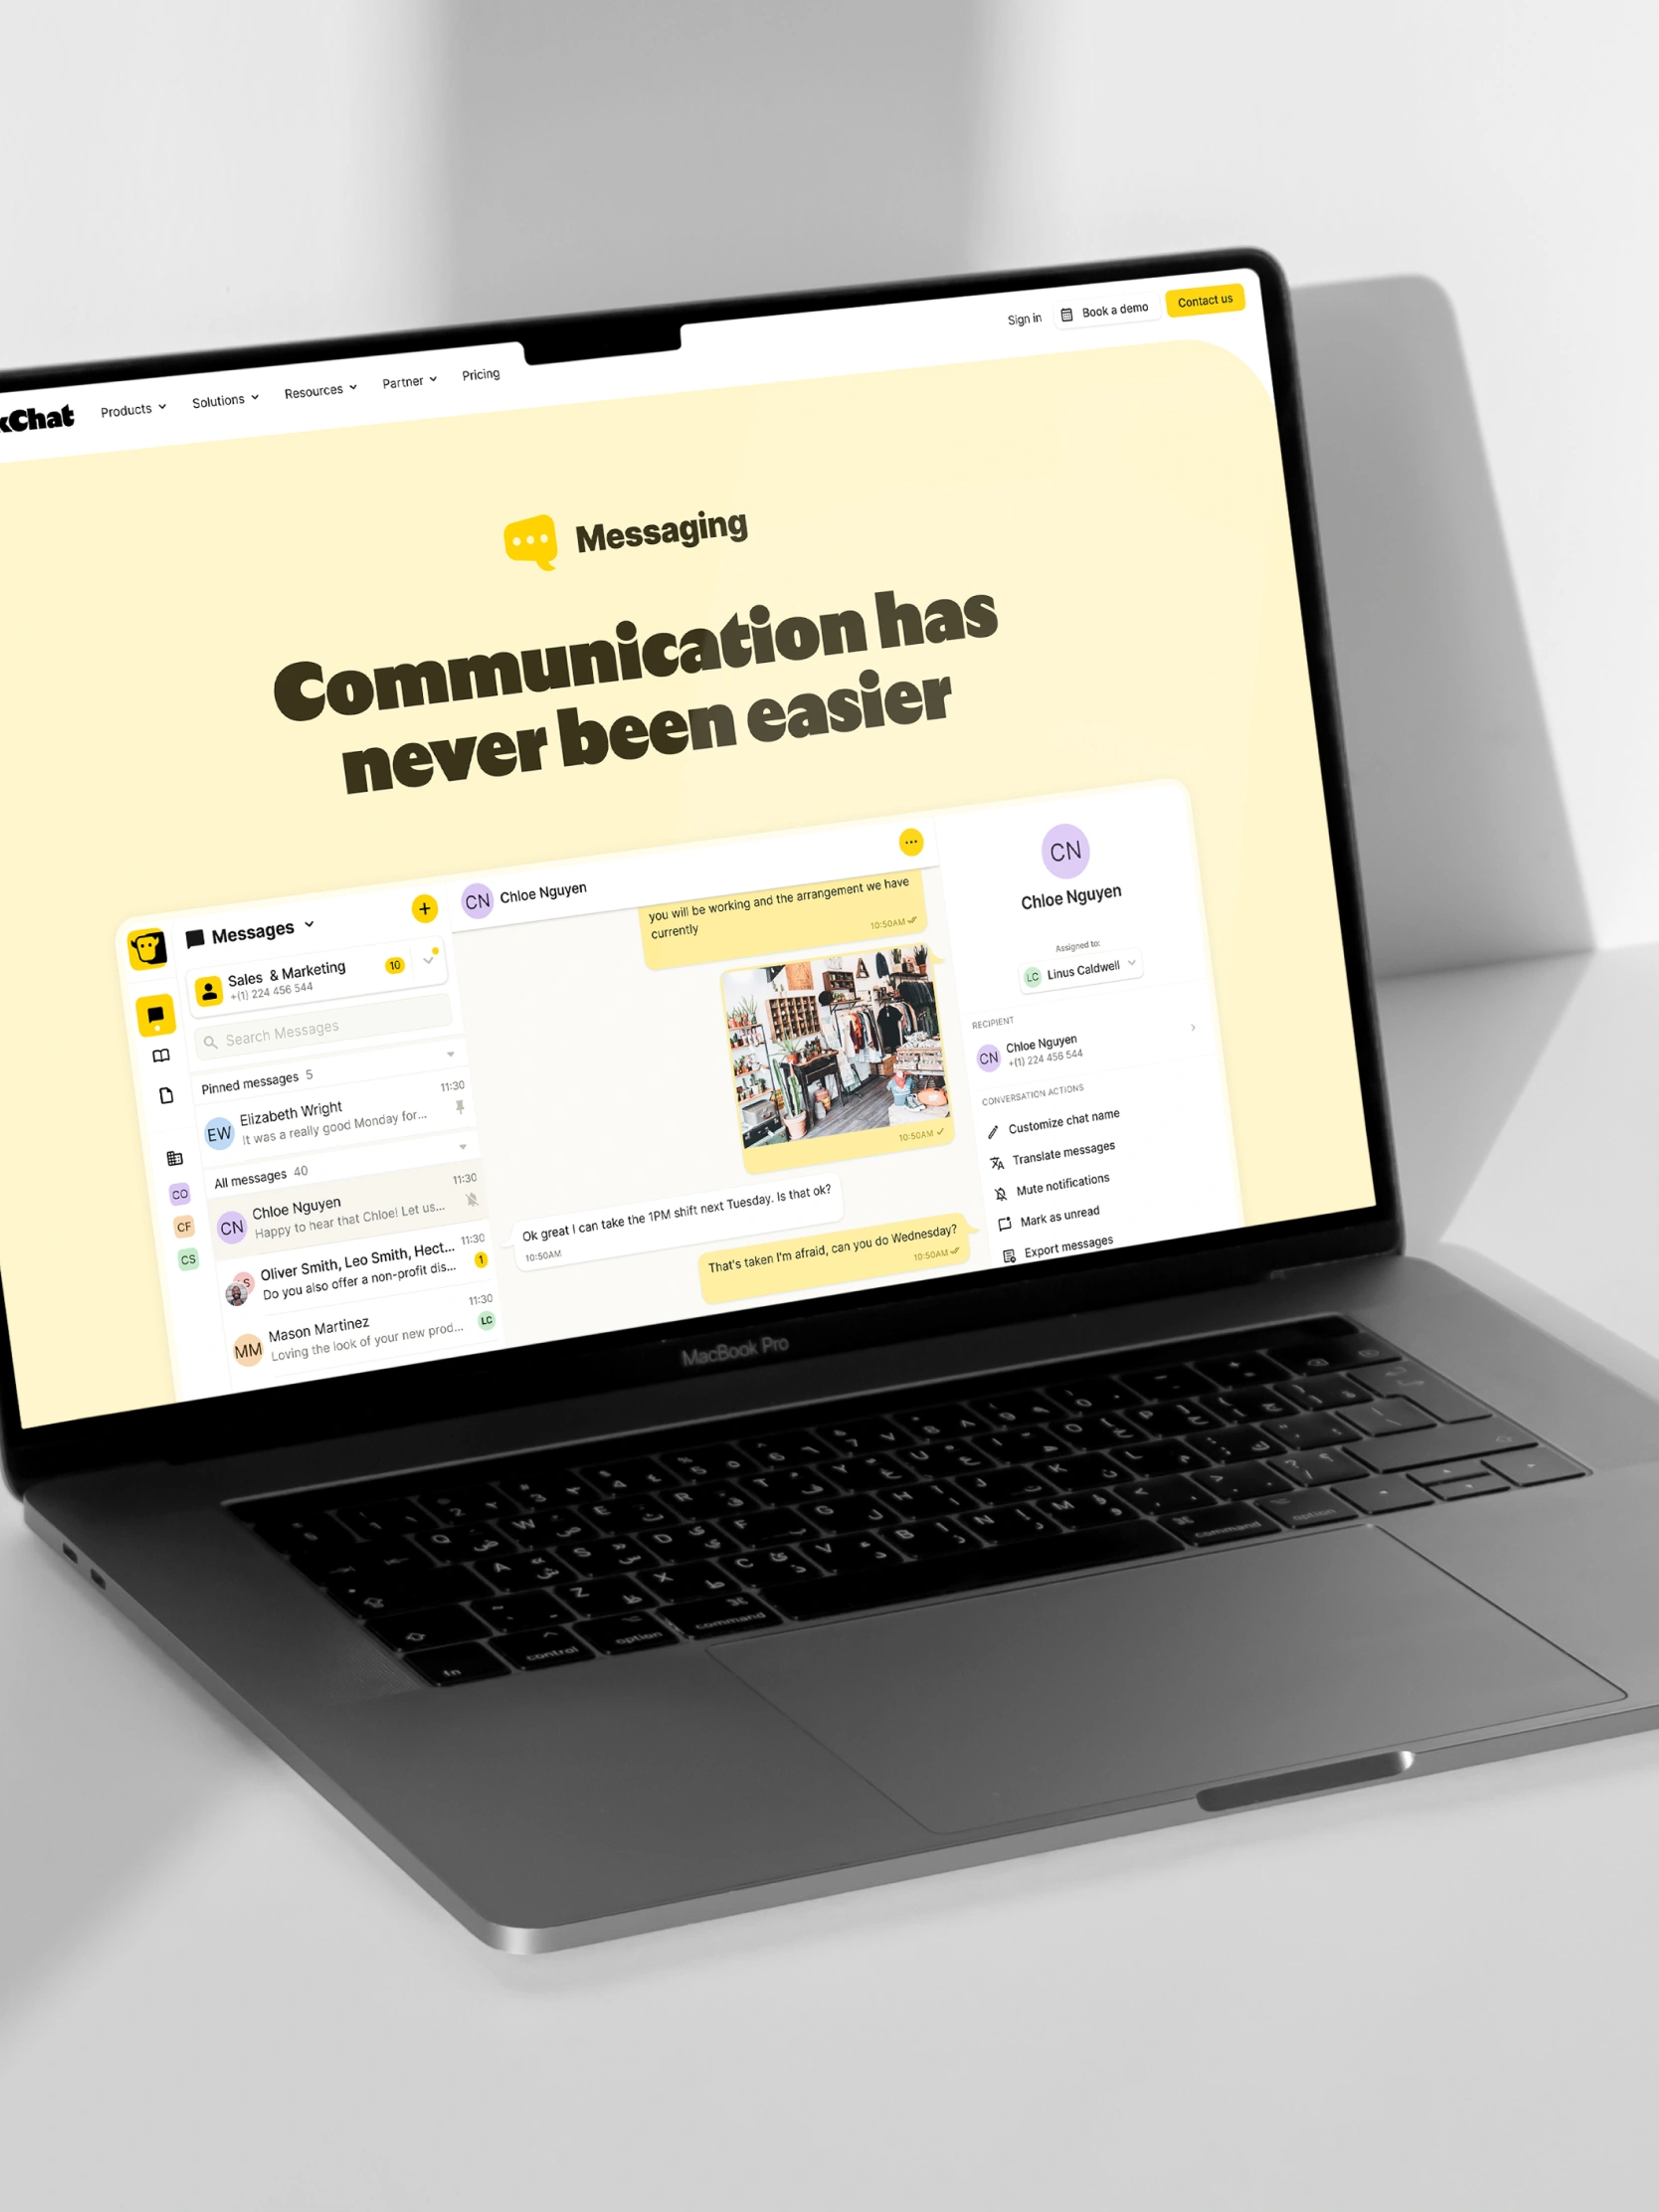 YakChat website "Communication has never been easier"